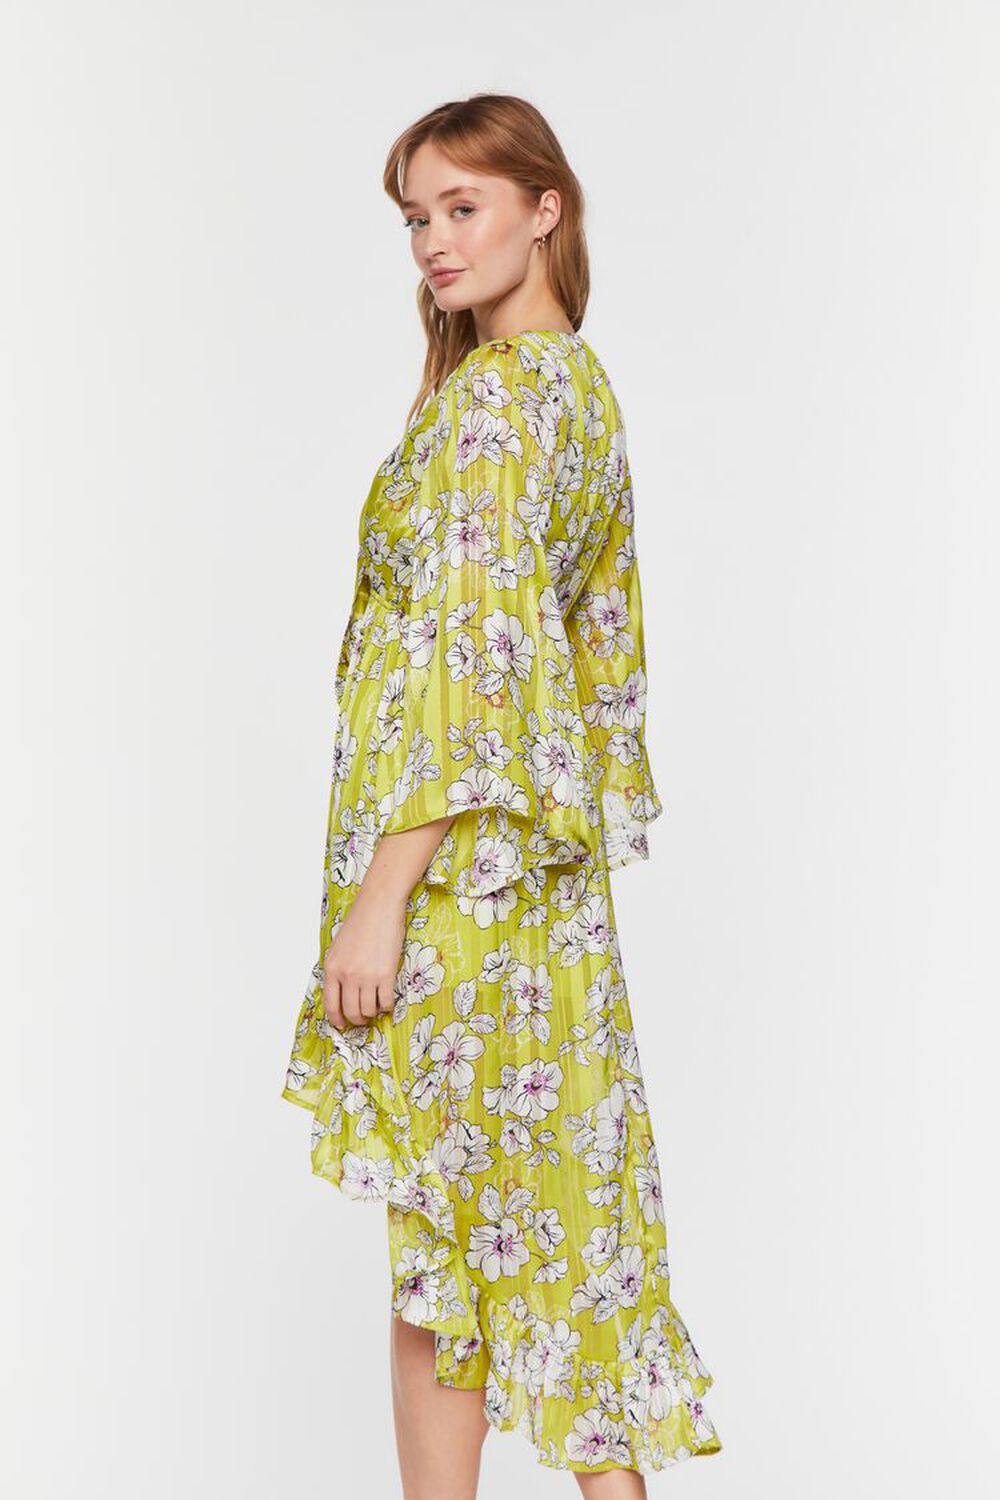 LIME/MULTI Floral Chiffon High-Low Dress, image 3